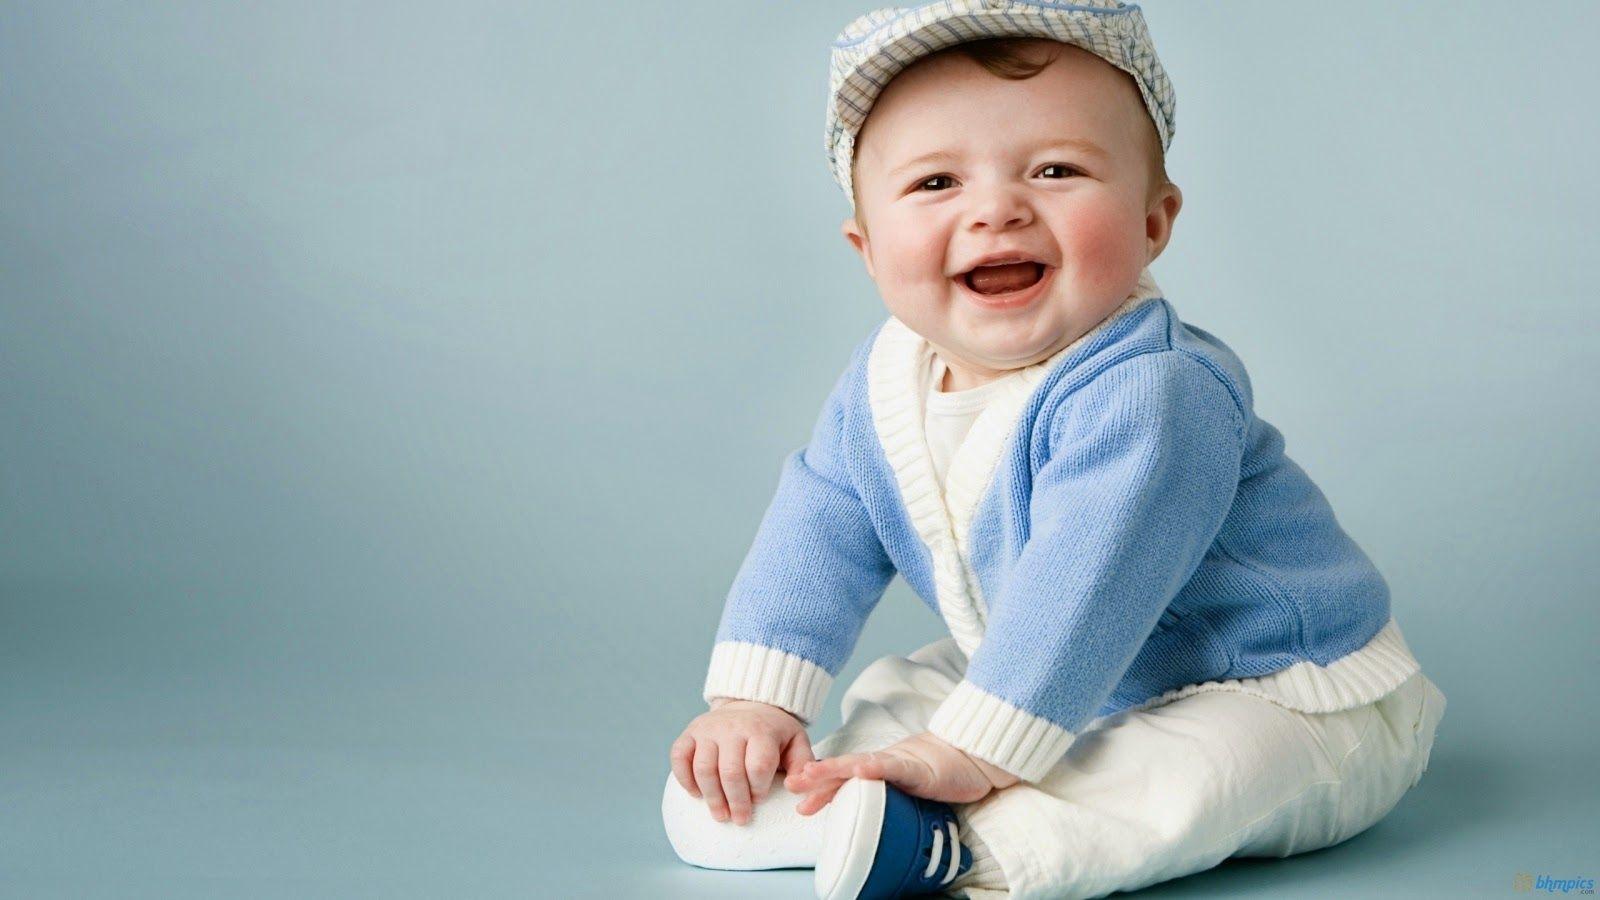 Baby Photo Wallpaper: Find best latest Baby Photo Wallpaper